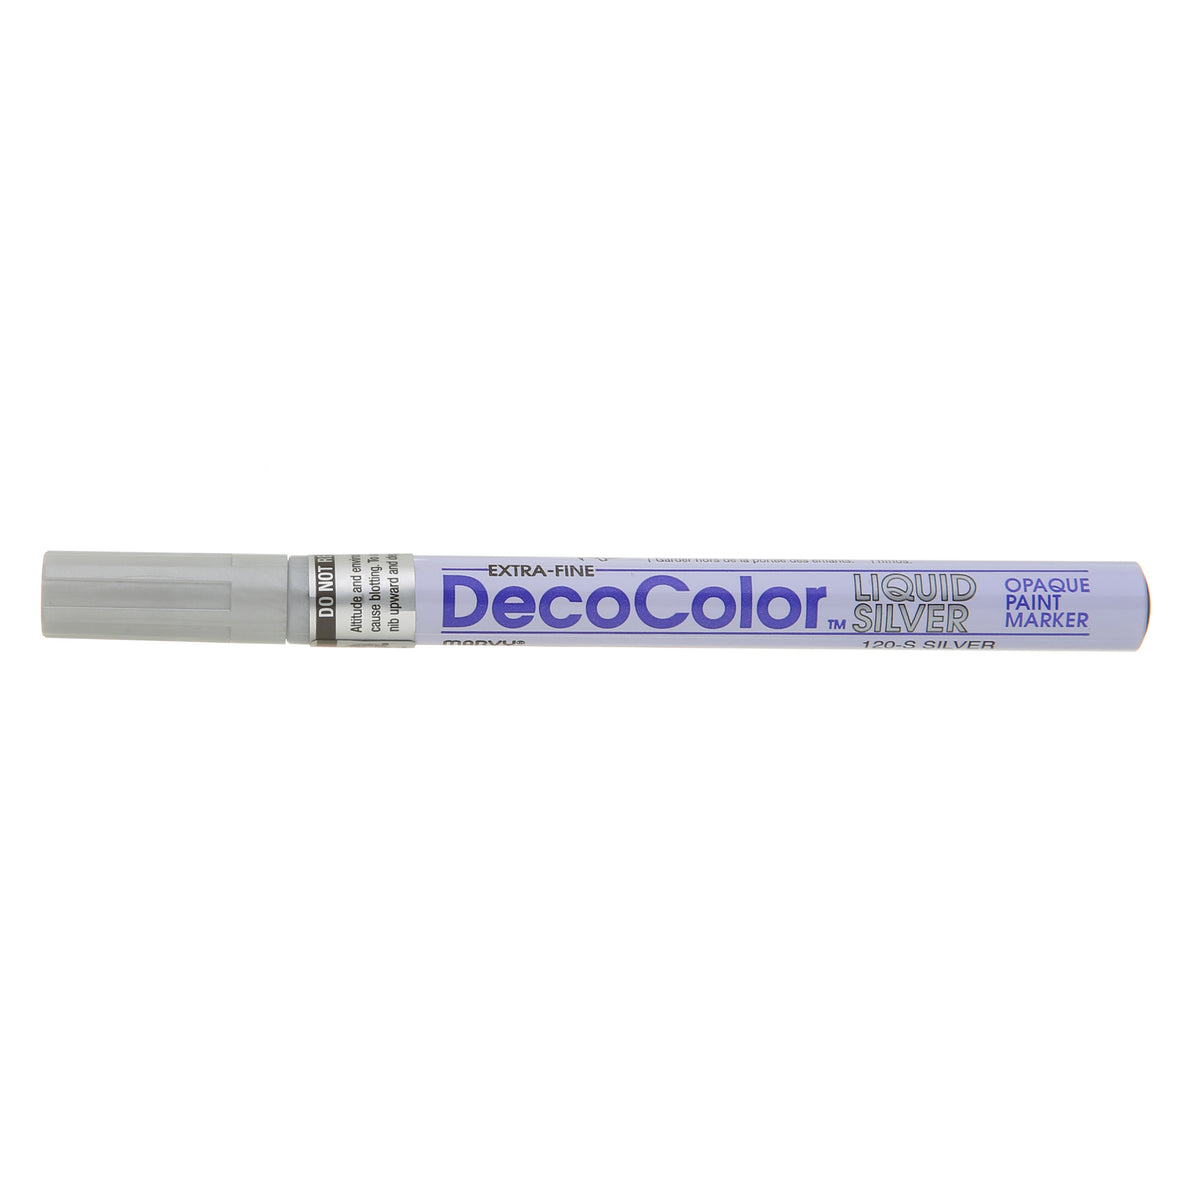 DecoColor Extra Fine Metallic Opaque Paint Marker-Liquid Silver, 1